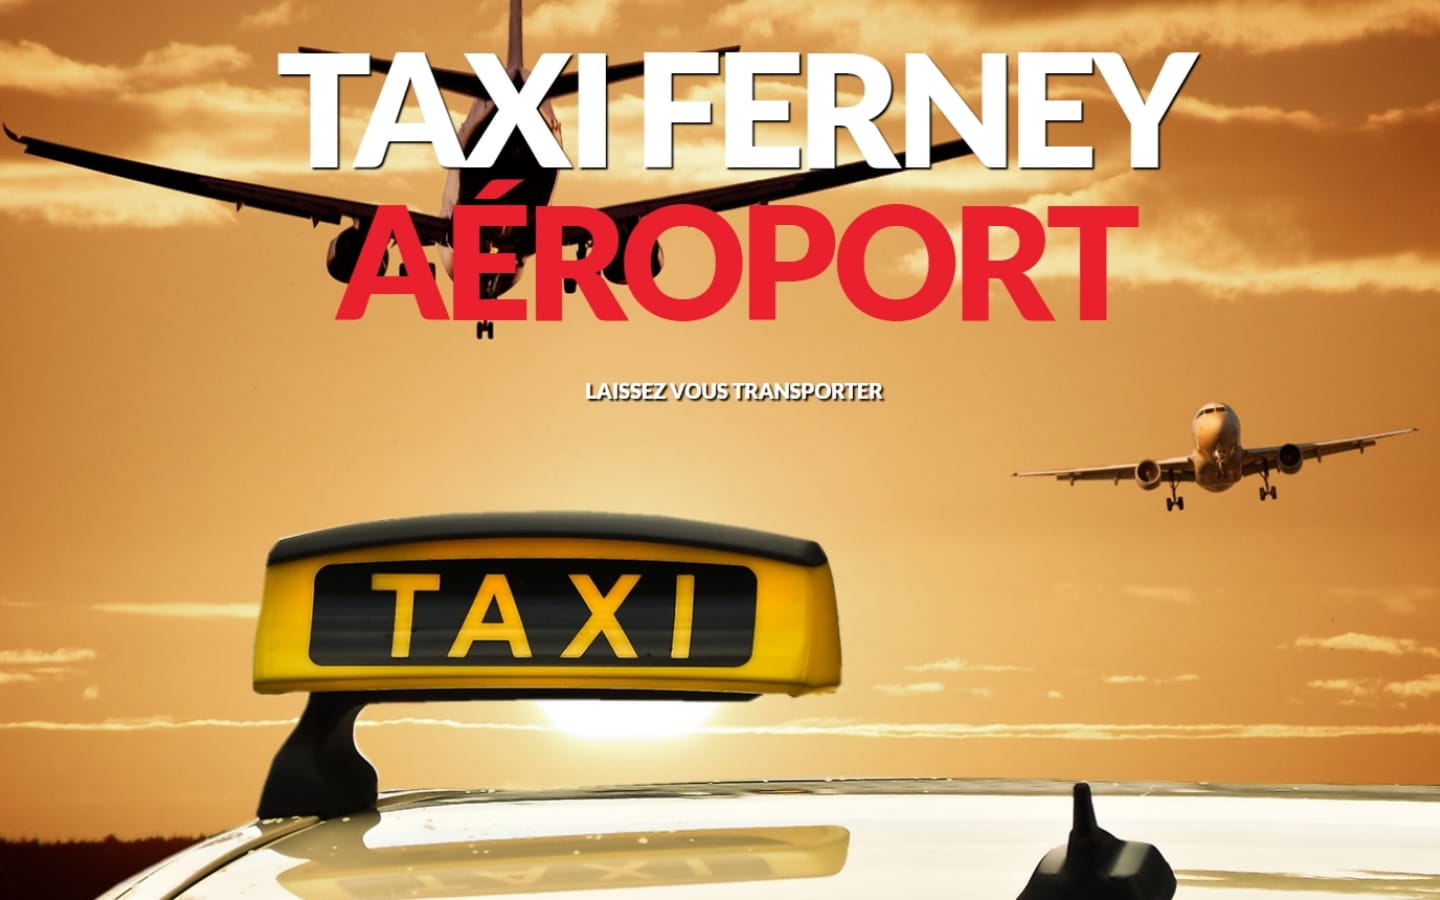 Taxi Ferney Aéroport